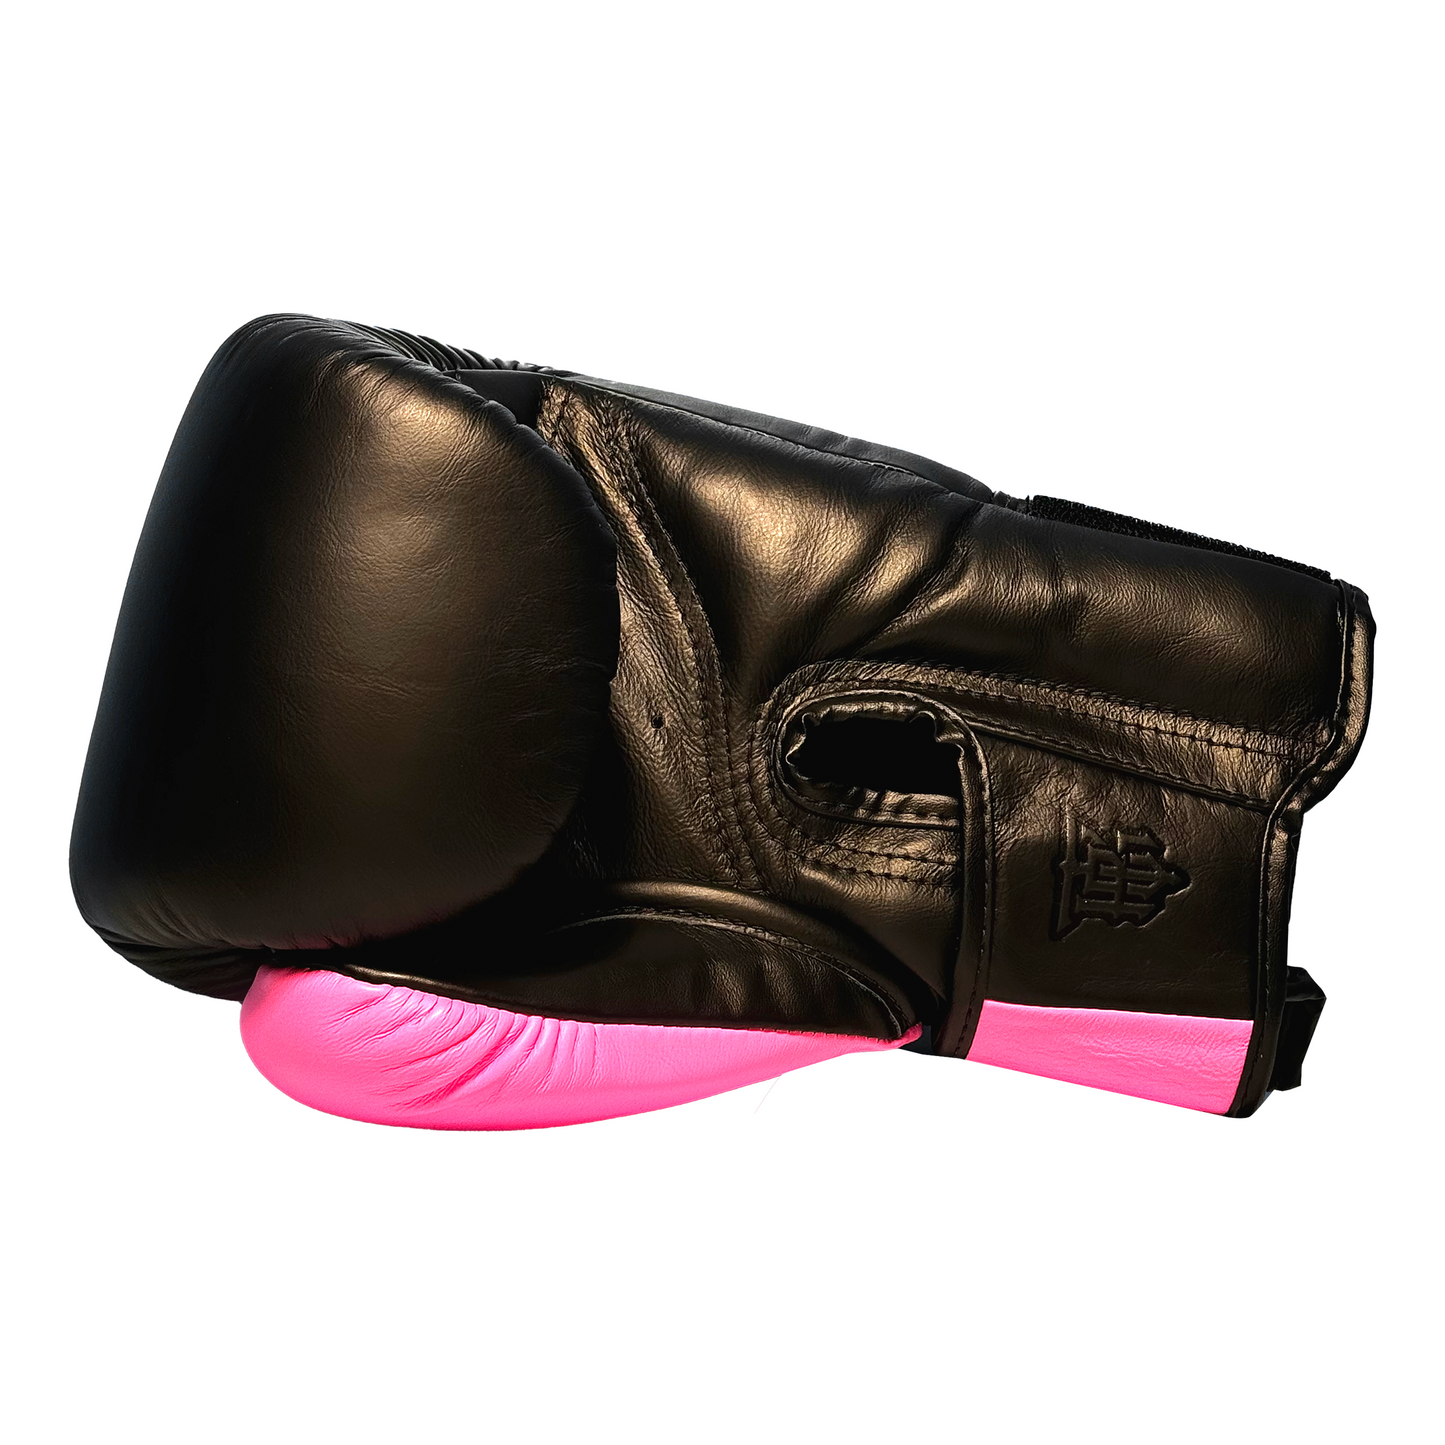 Top King Boxhandschuhe "Power" schwarz/pink